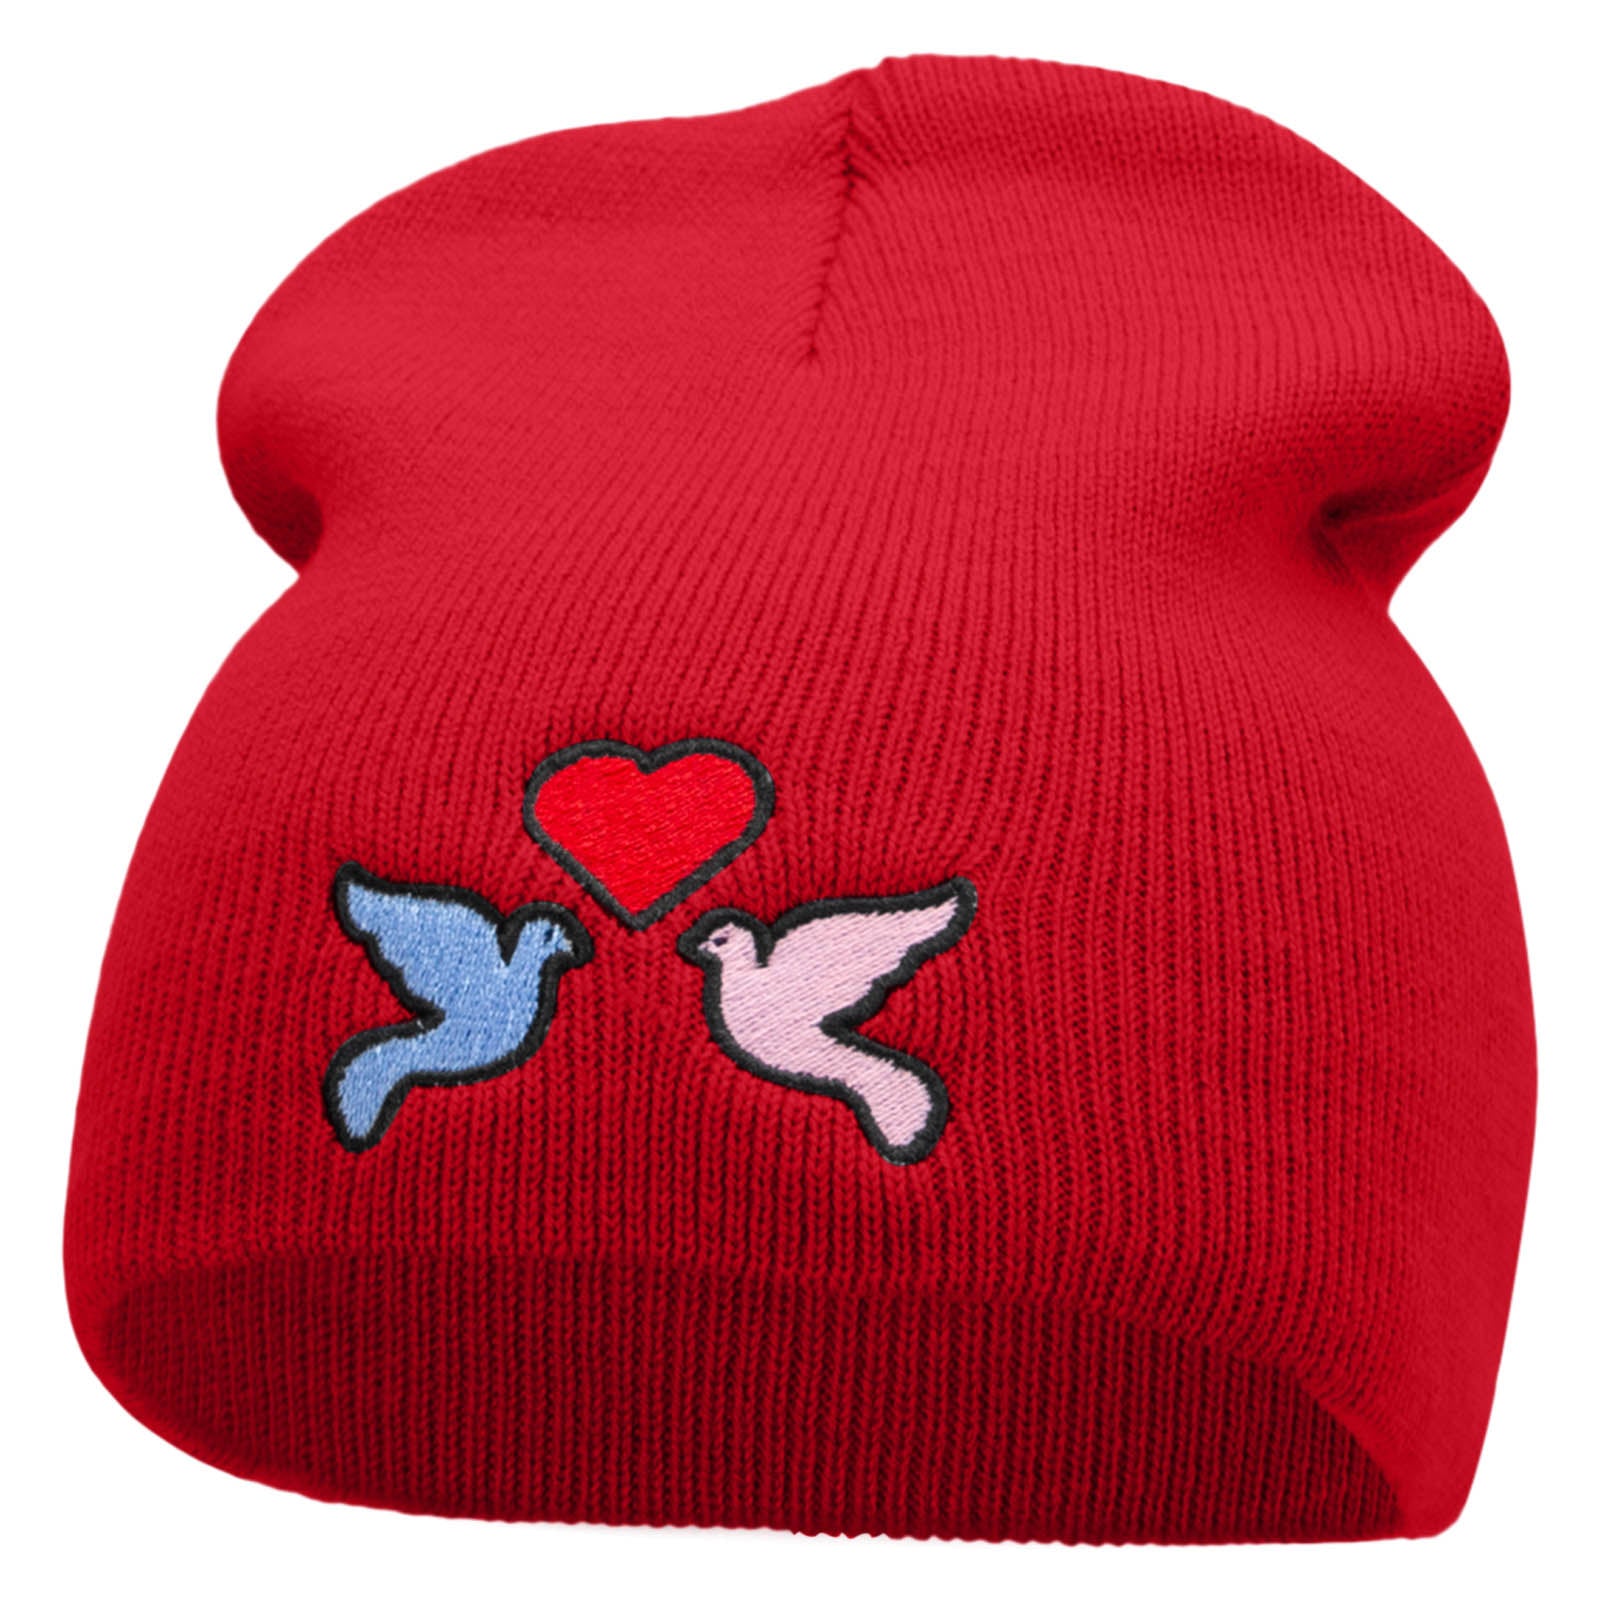 2 Love Birds Embroidered 8 Inch Short Beanie - Red OSFM